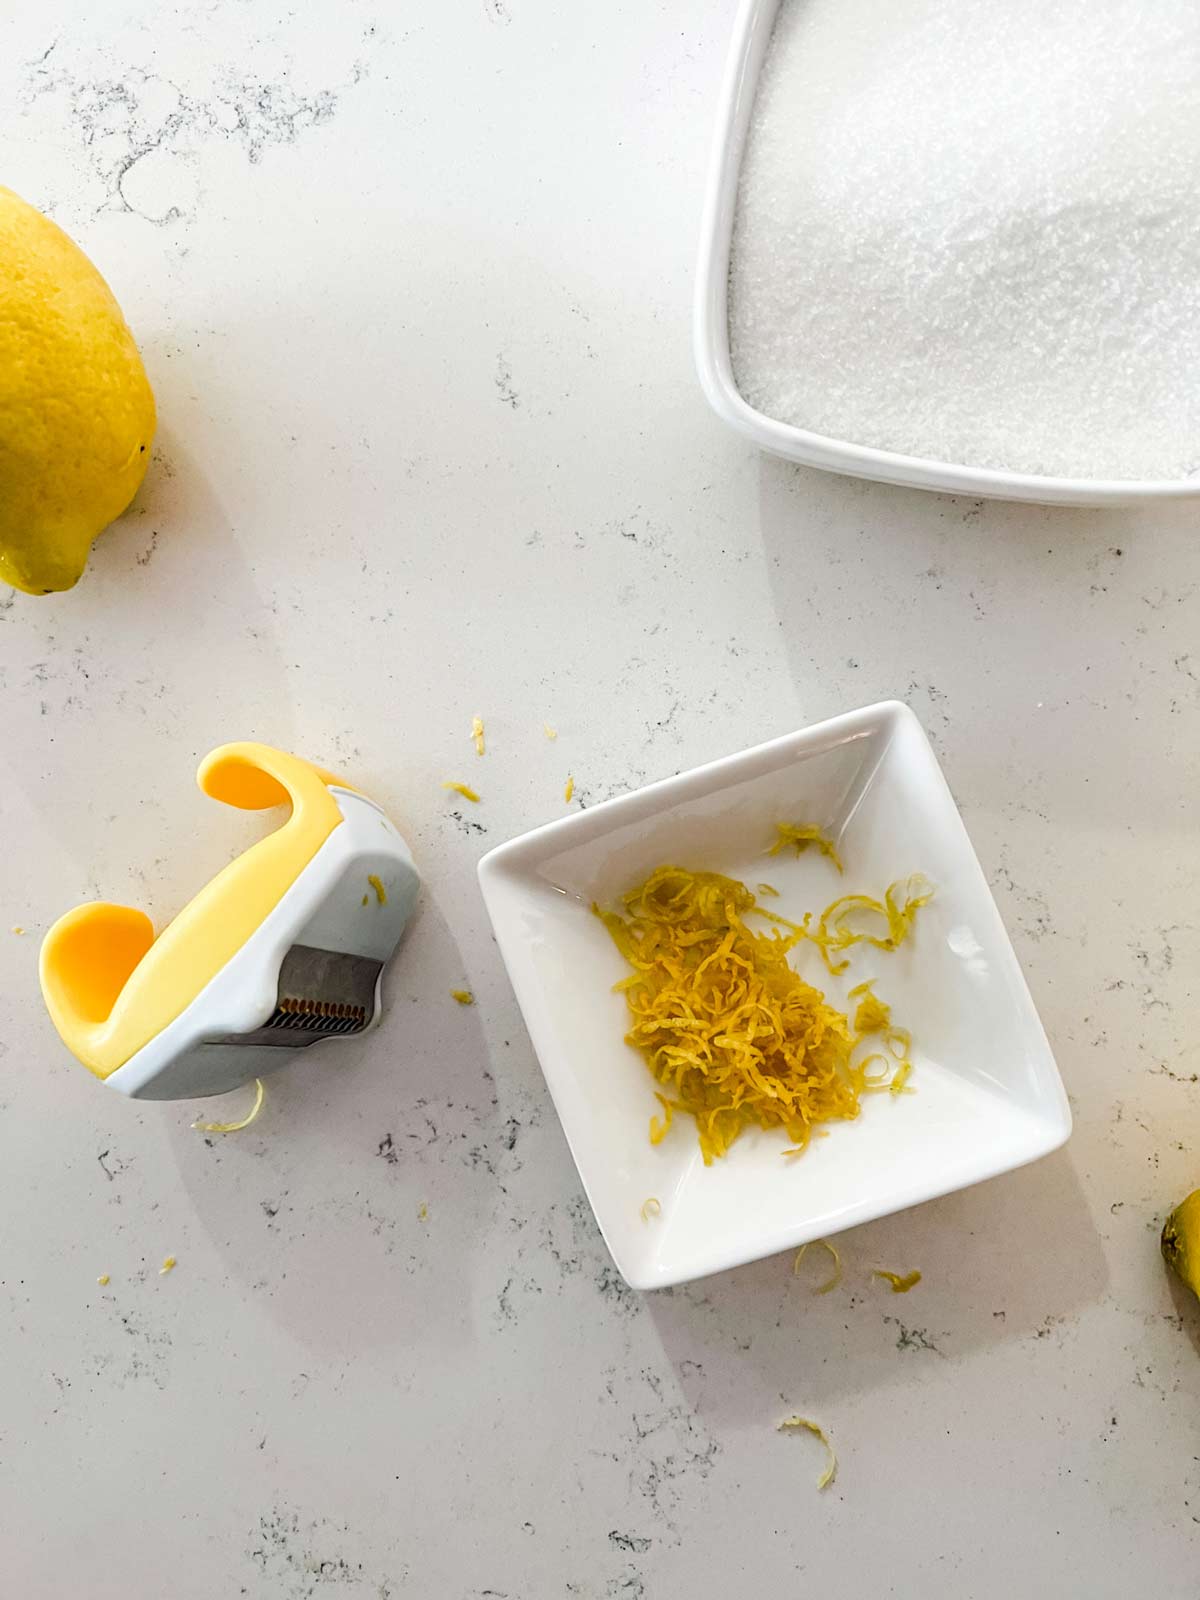 A small dish of lemon zest sitting next to a zester.